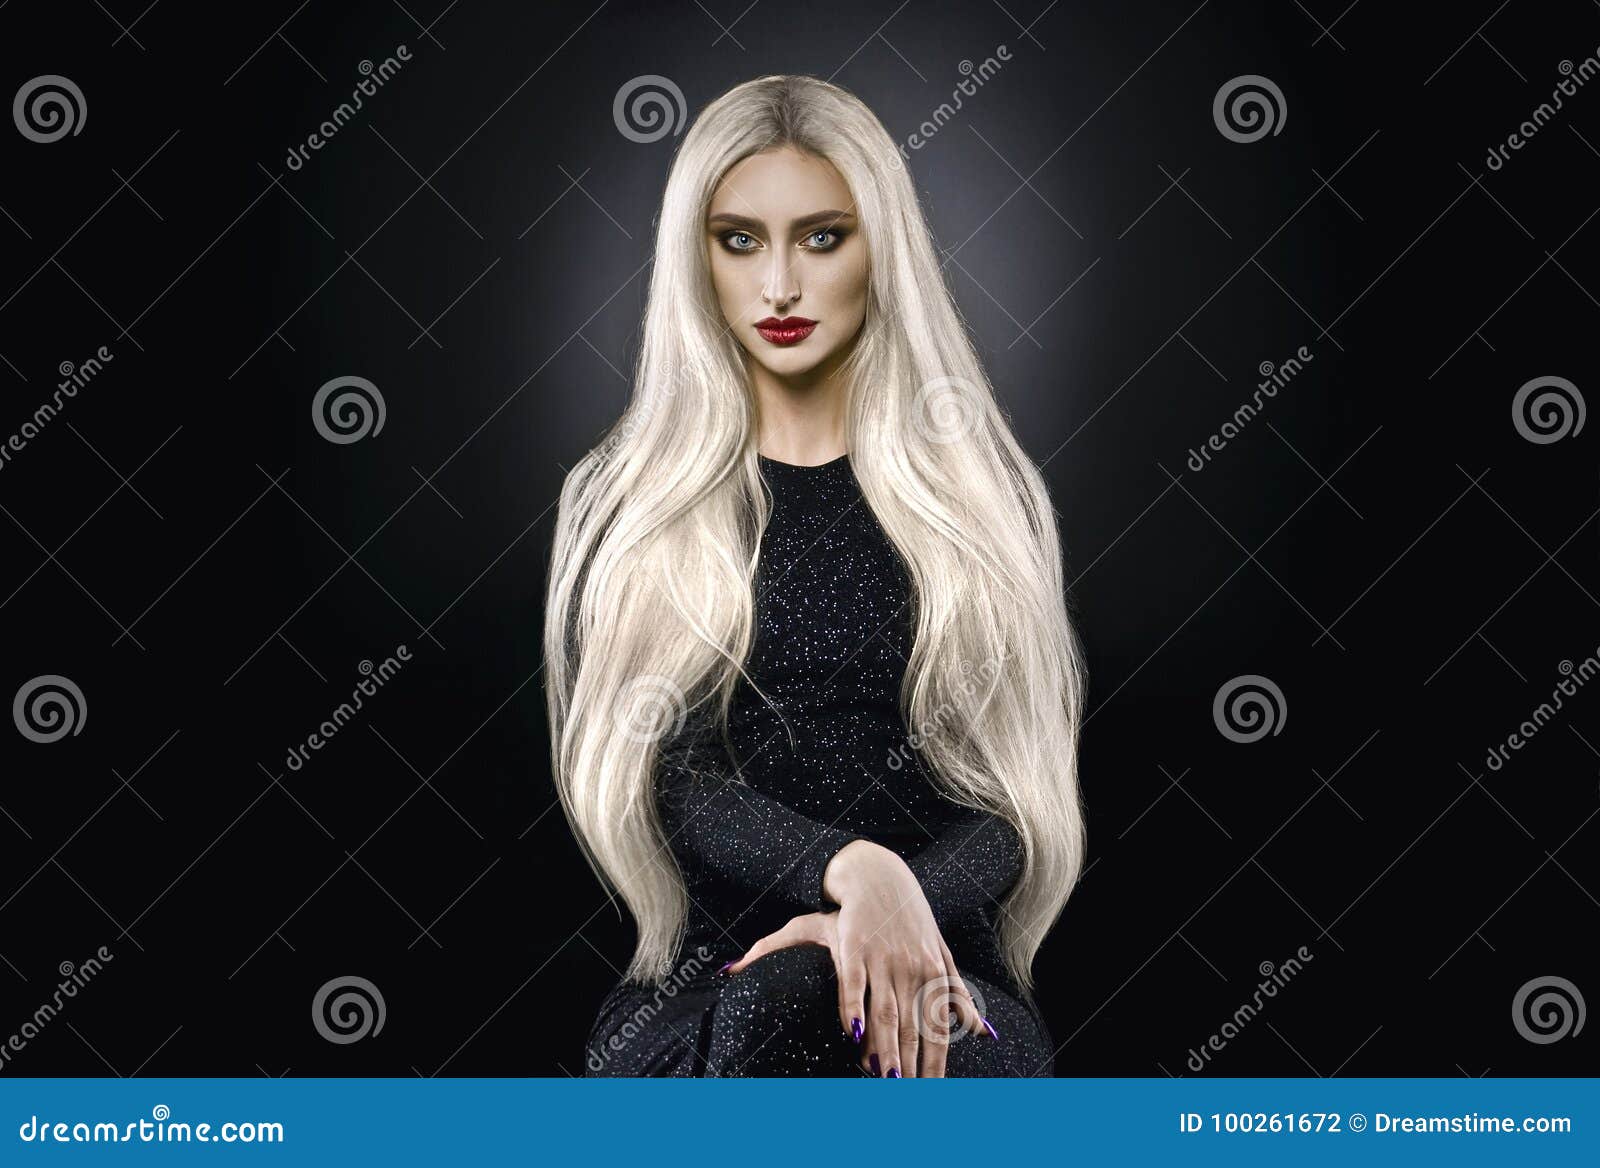 Platinum Blonde Hair Woman Stock Photo Image Of Dress